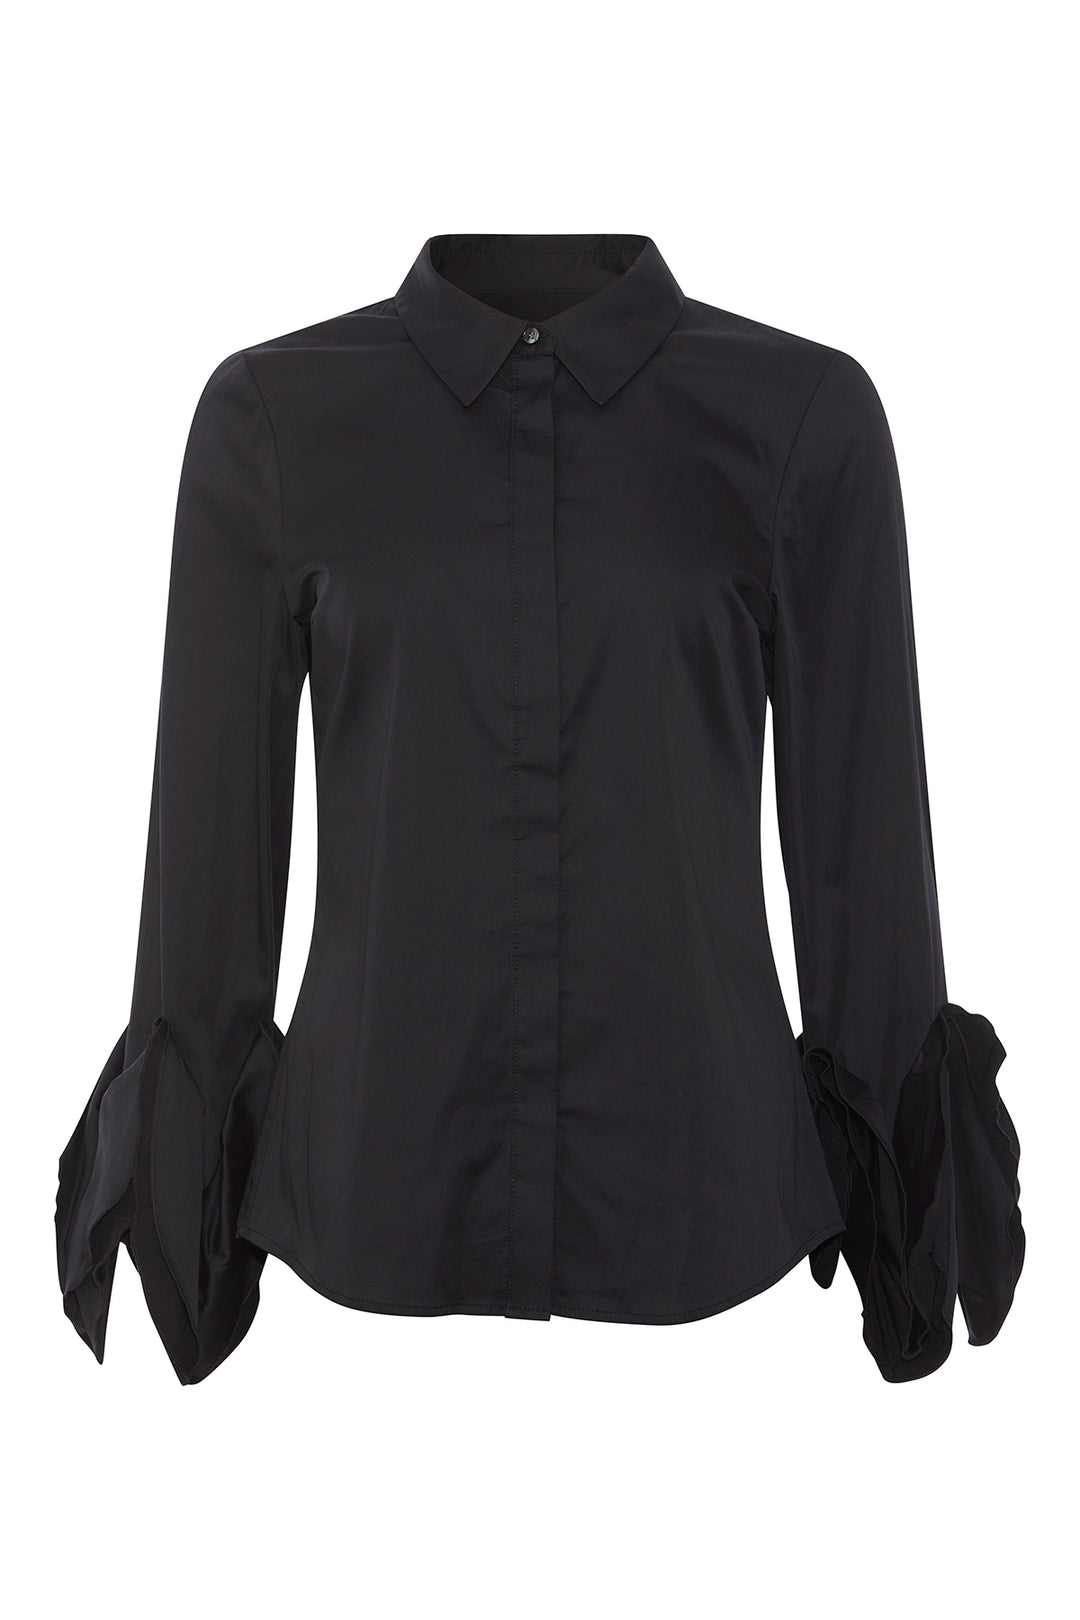 PBO Minra shirt SHIRTS 20 Black